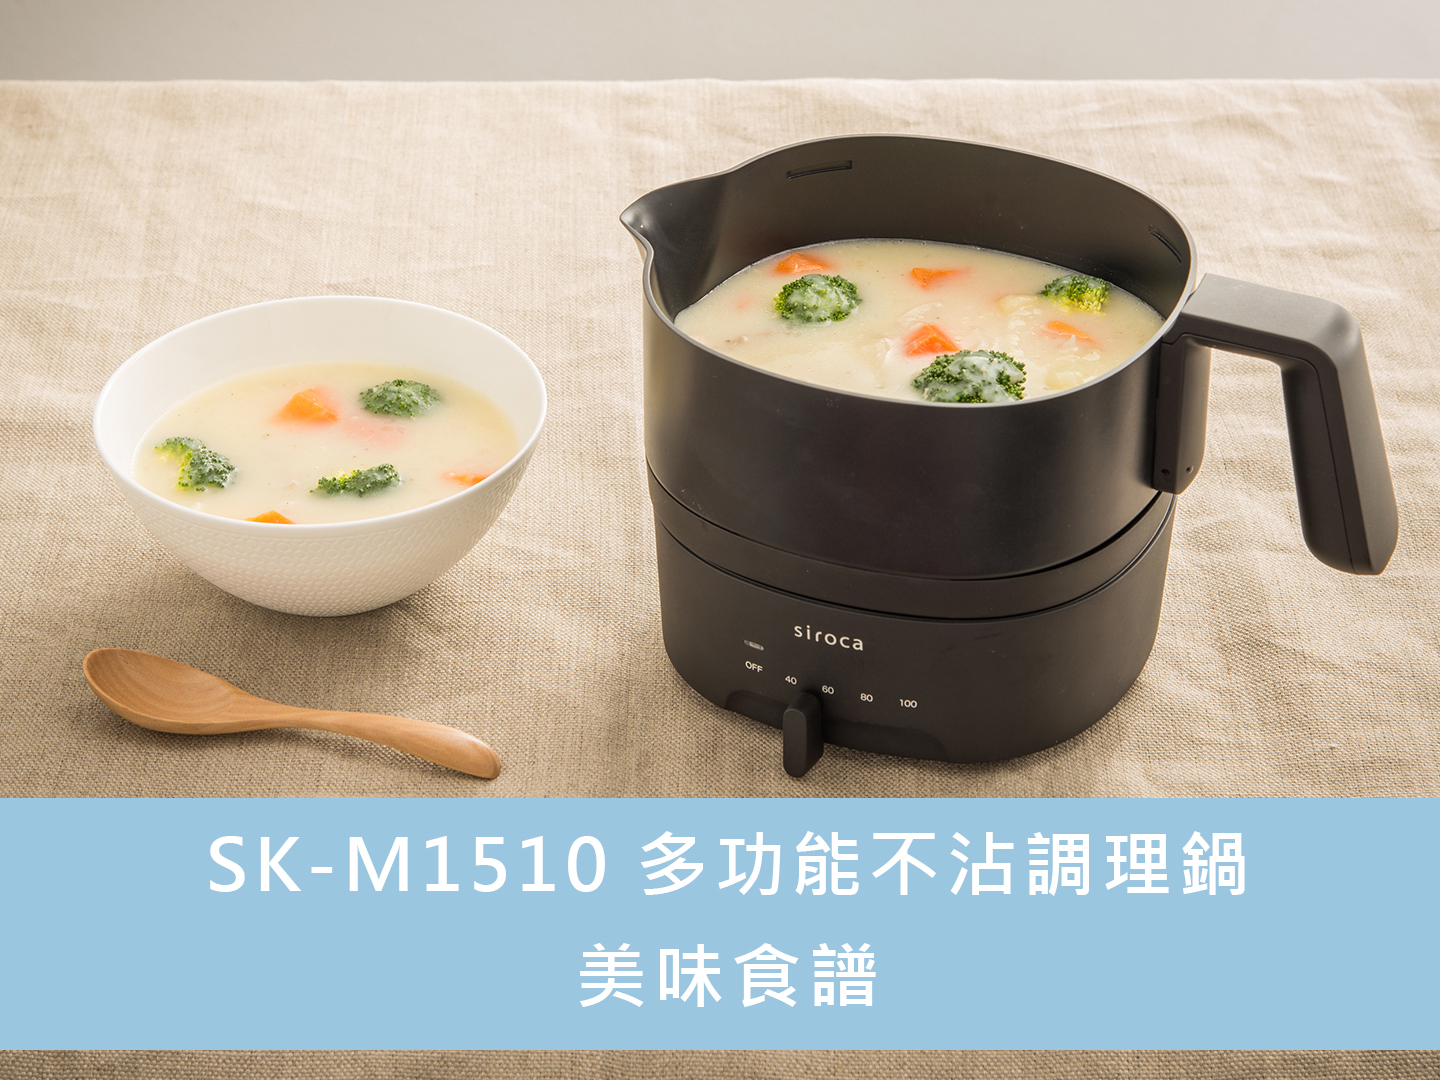 【siroca】SK-M1510 多功能調理鍋美味食譜